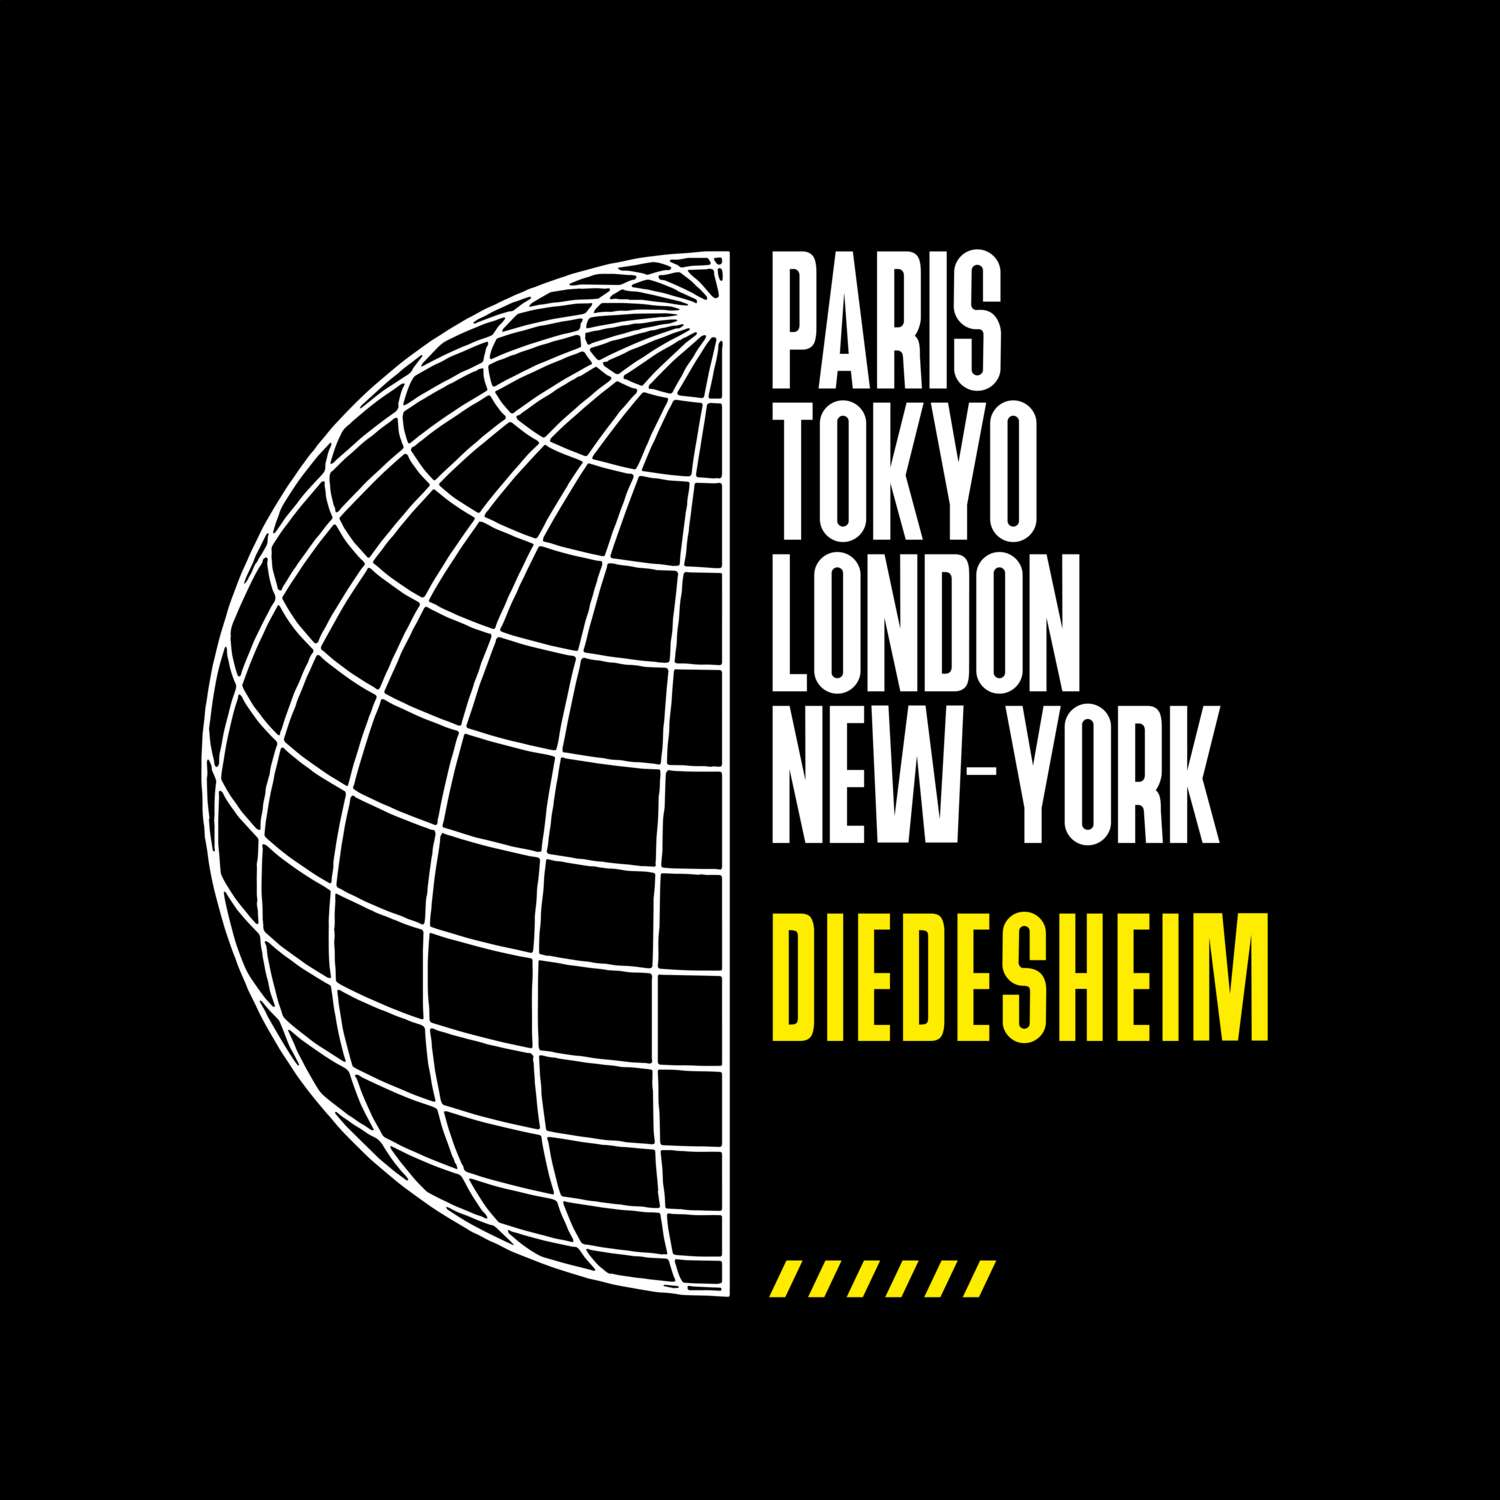 Diedesheim T-Shirt »Paris Tokyo London«